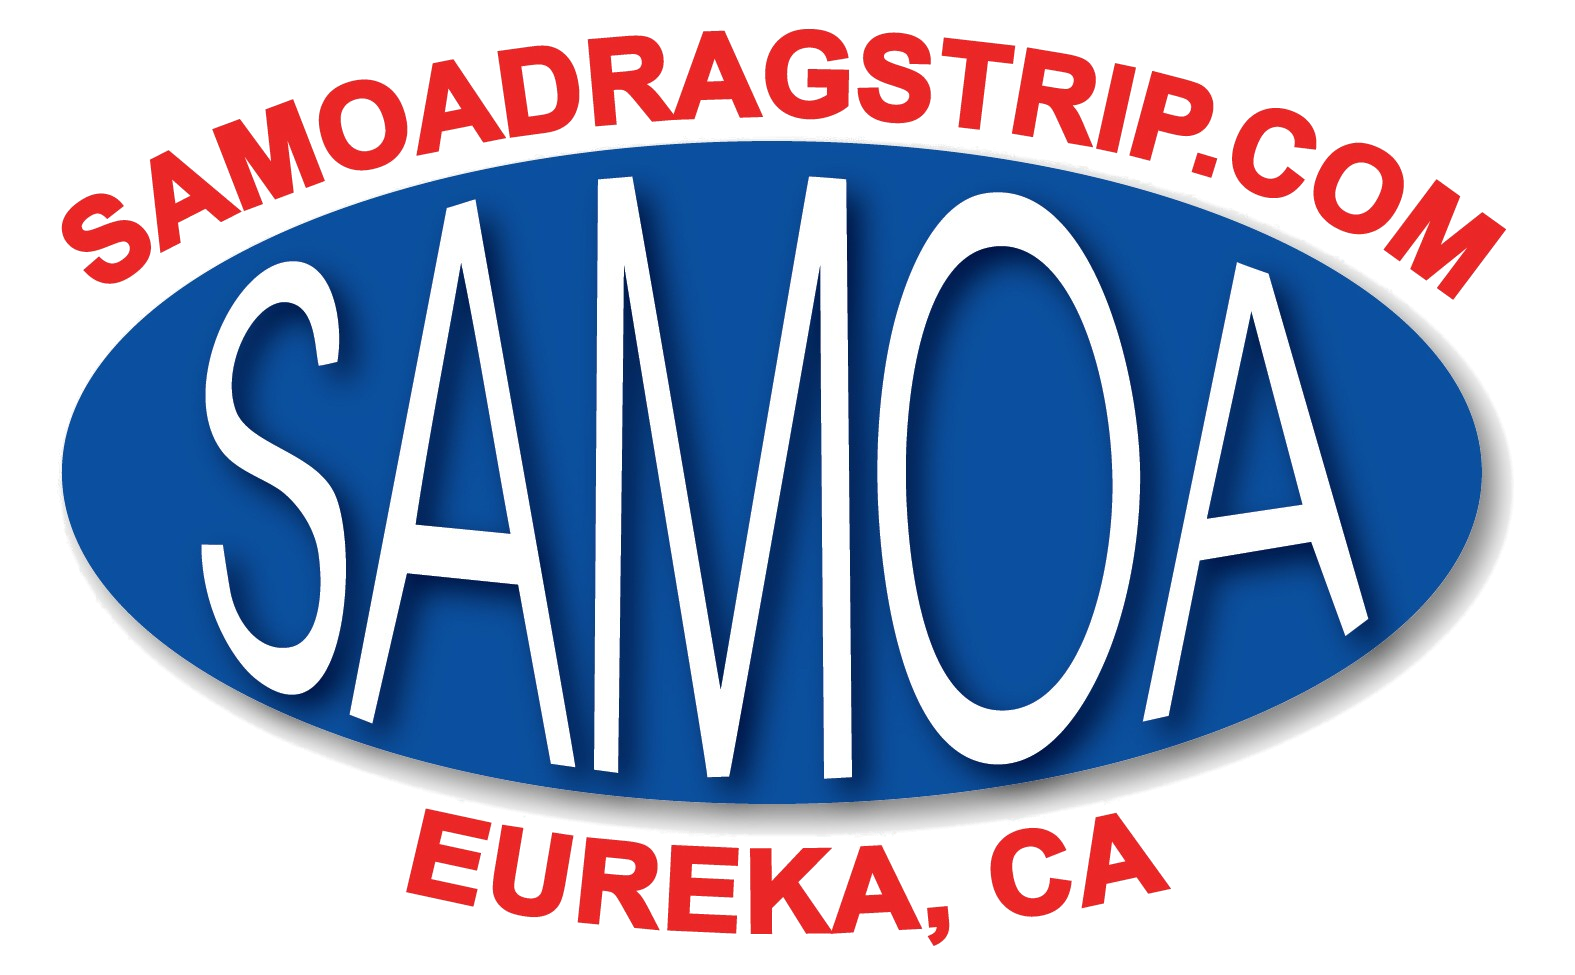 Somoa Drag Strip logo